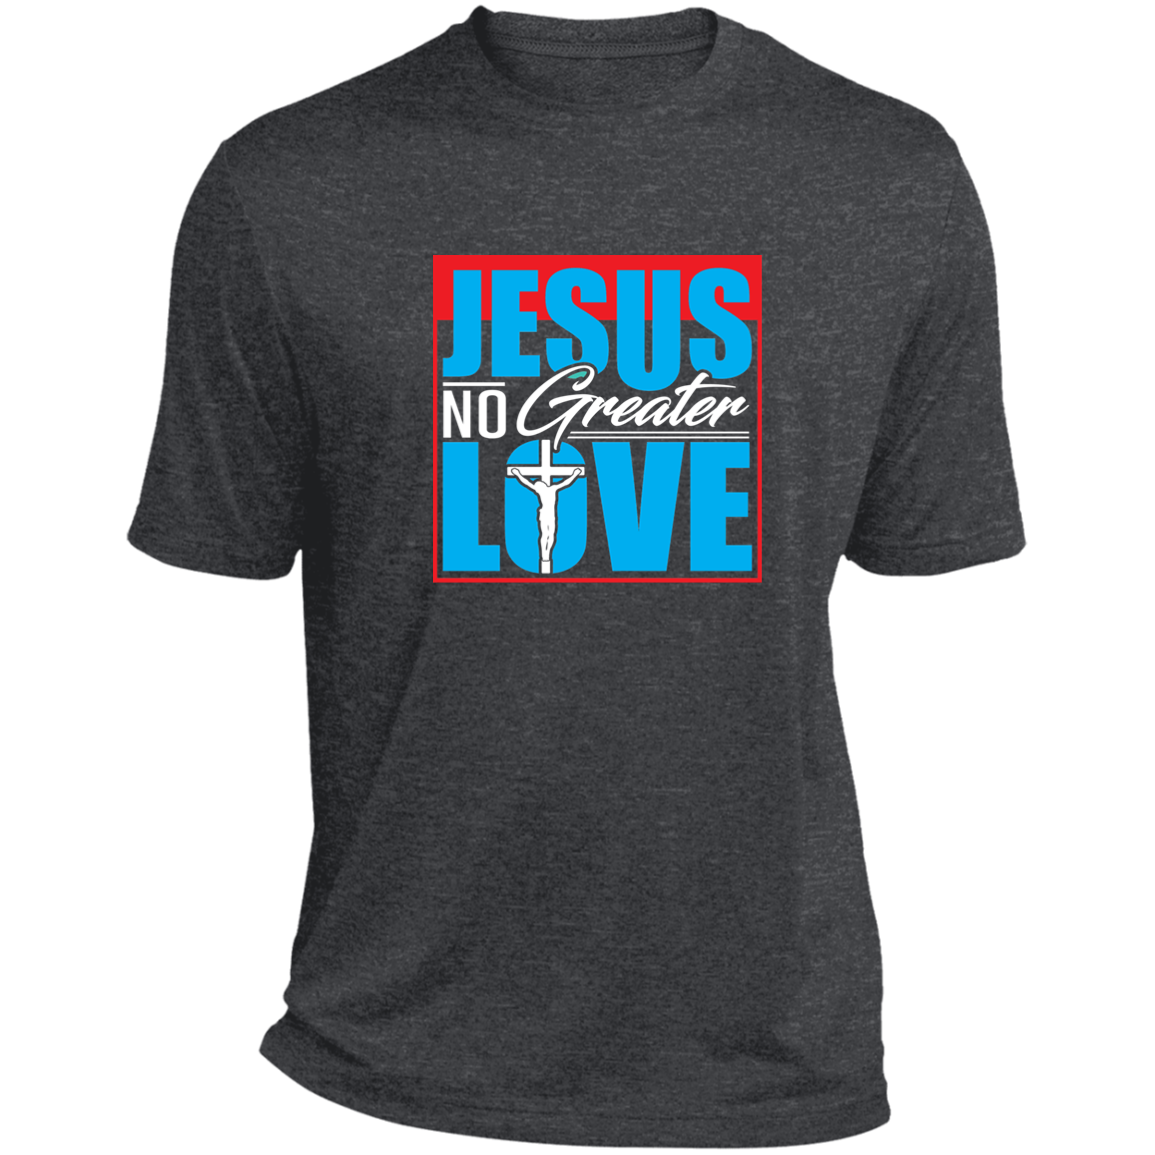 JESUS NO GREATER LOVE DS Tee